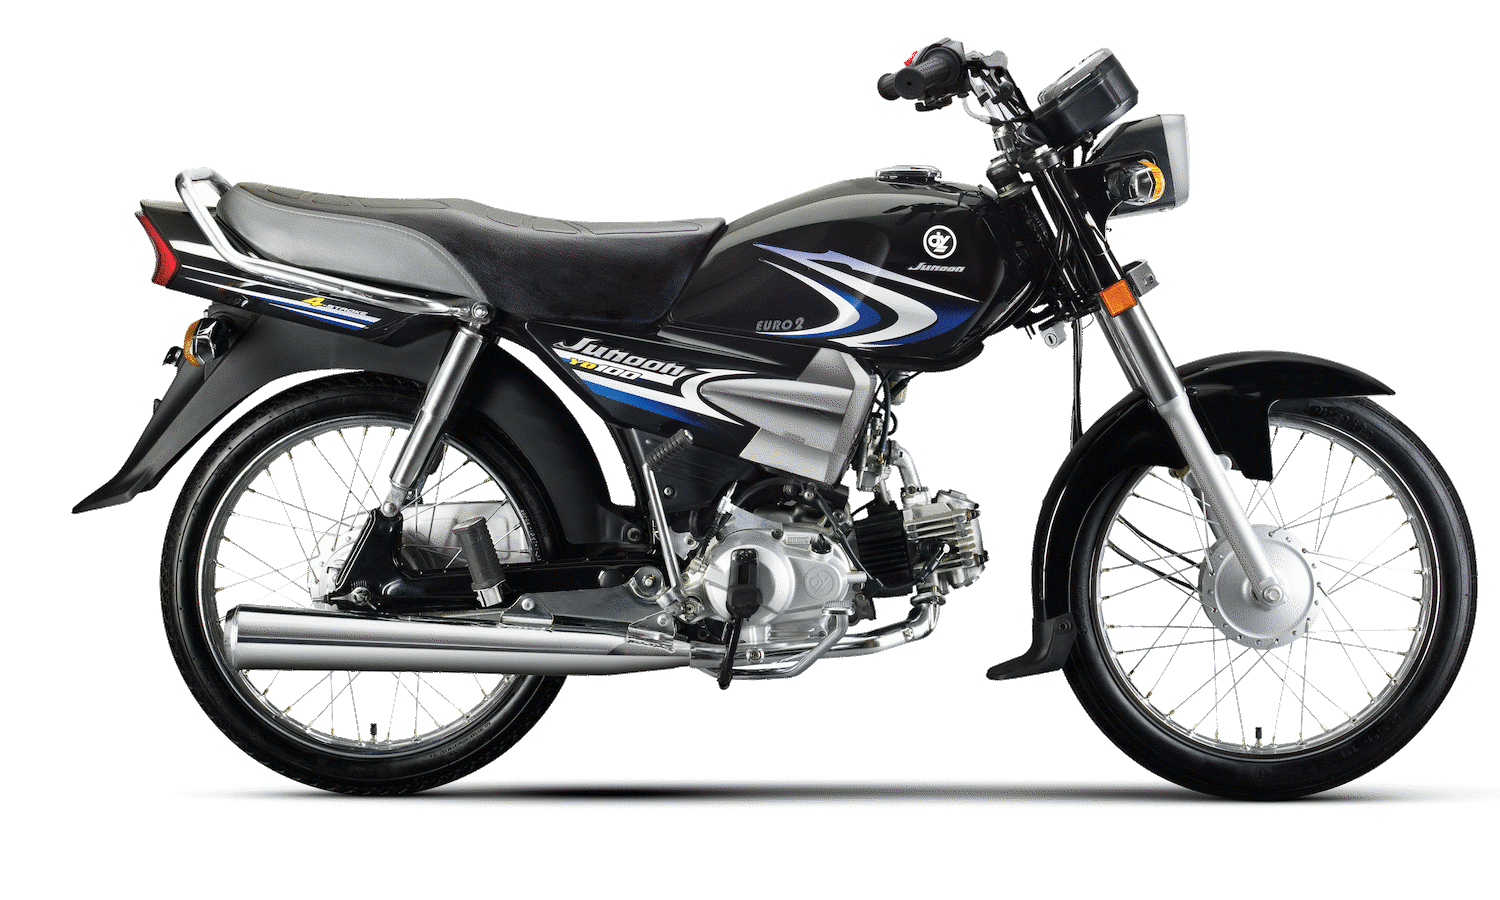 Yamaha 100 Junoon price in Pakistan 2022